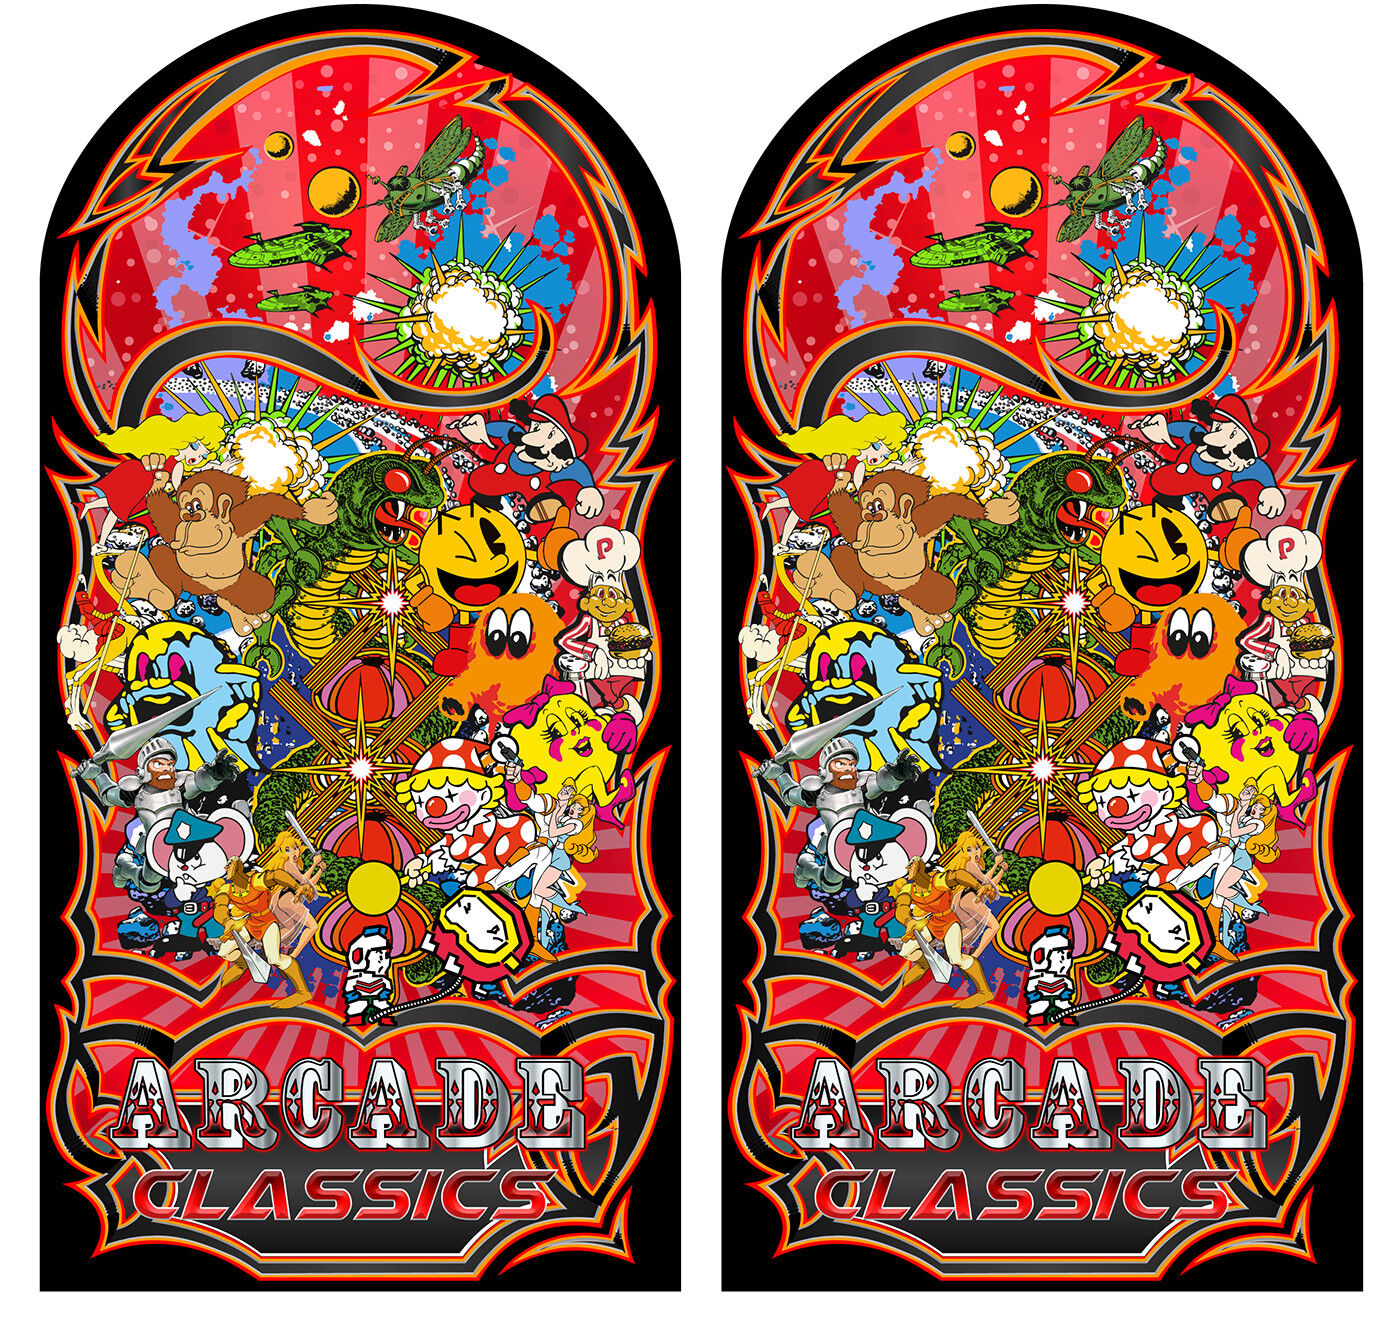 Mame Multicade Classics Side Art Arcade Cabinet Graphics Decals Stickers Set db graphix - фотография #3